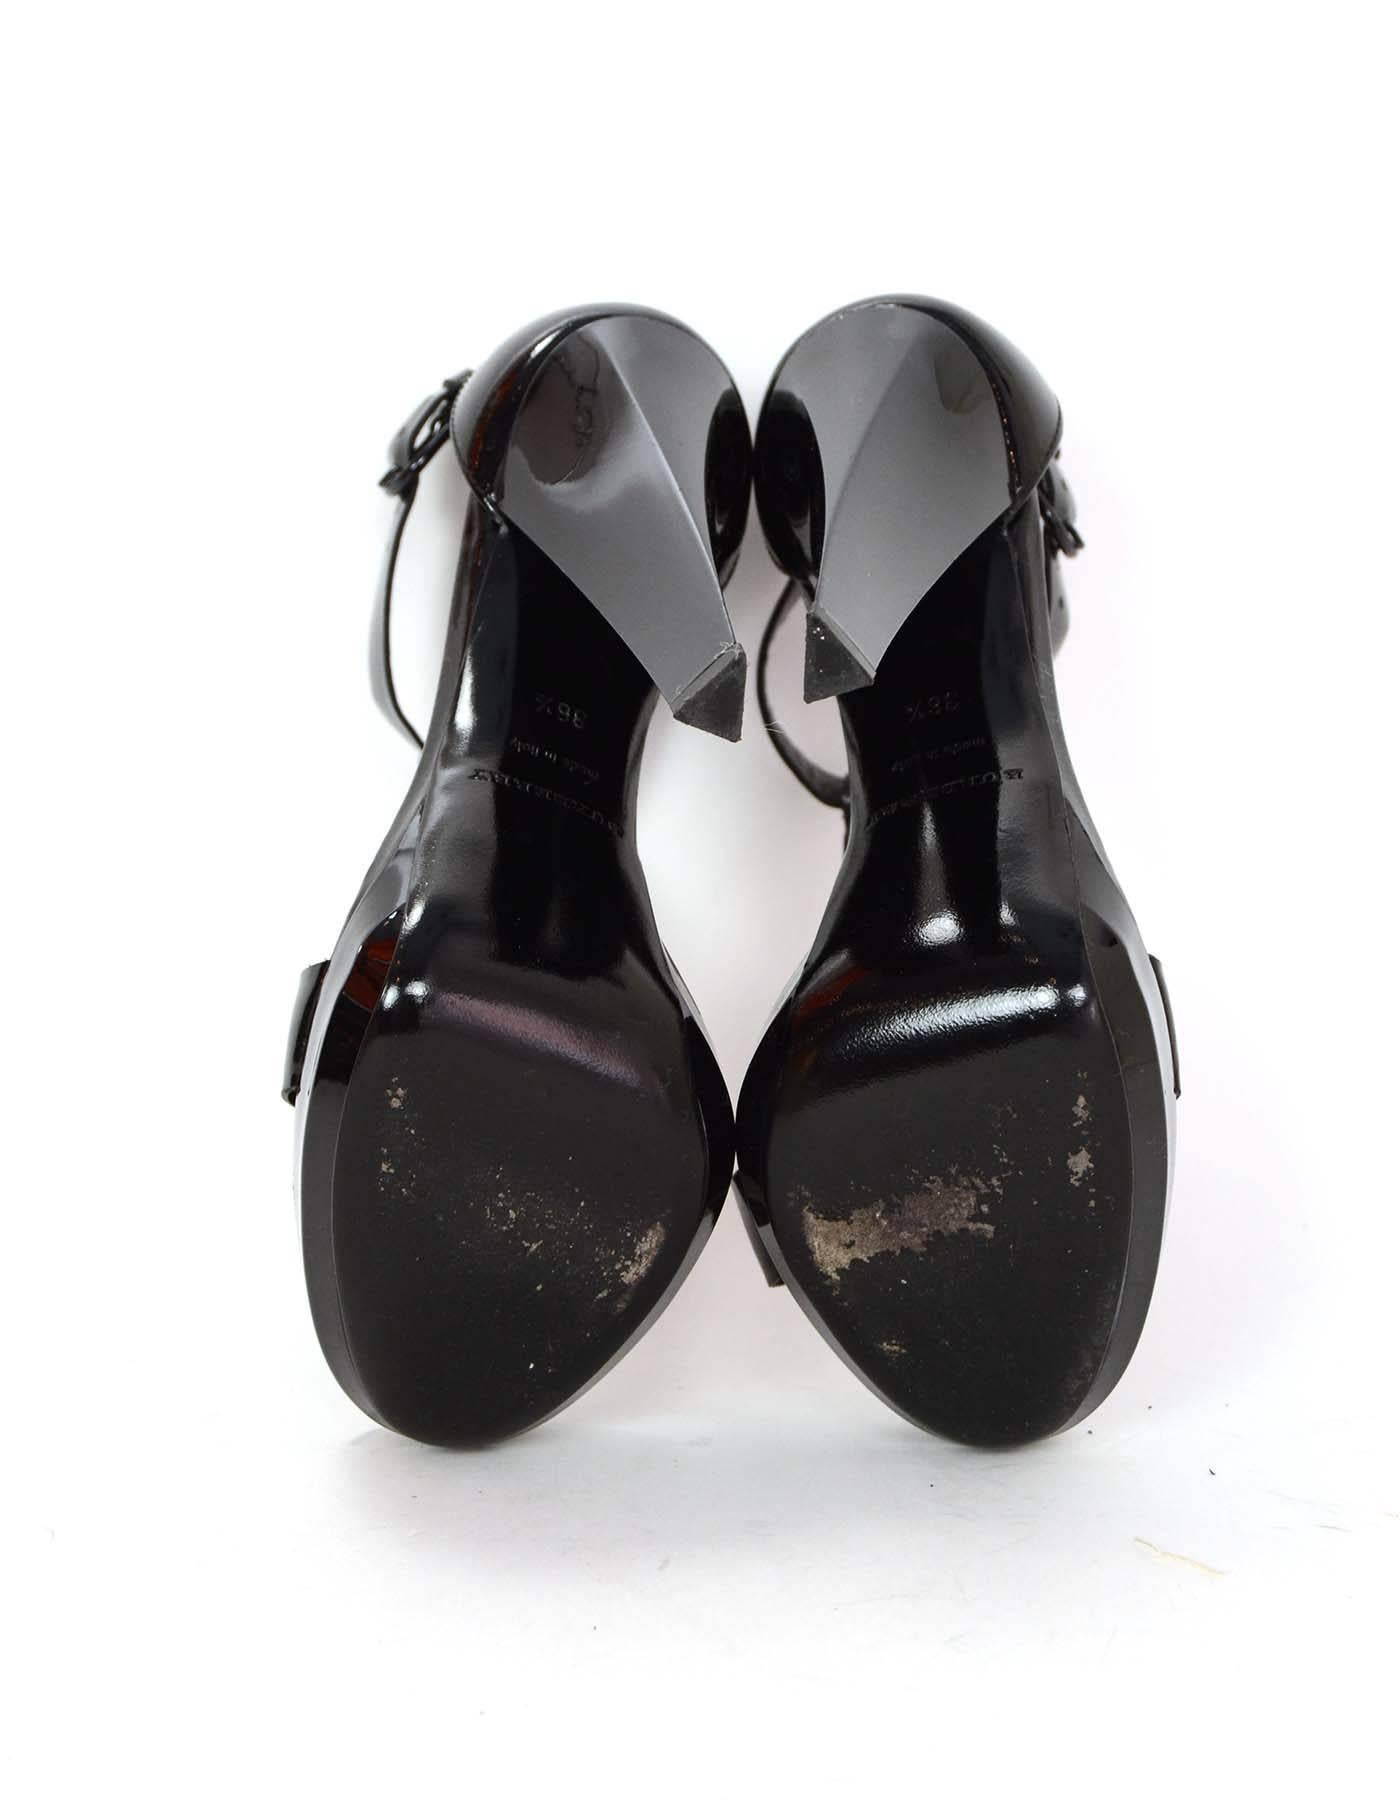 Burberry Black Patent Leather and Nova Plaid Sandals Sz 36.5 rt. $650 2